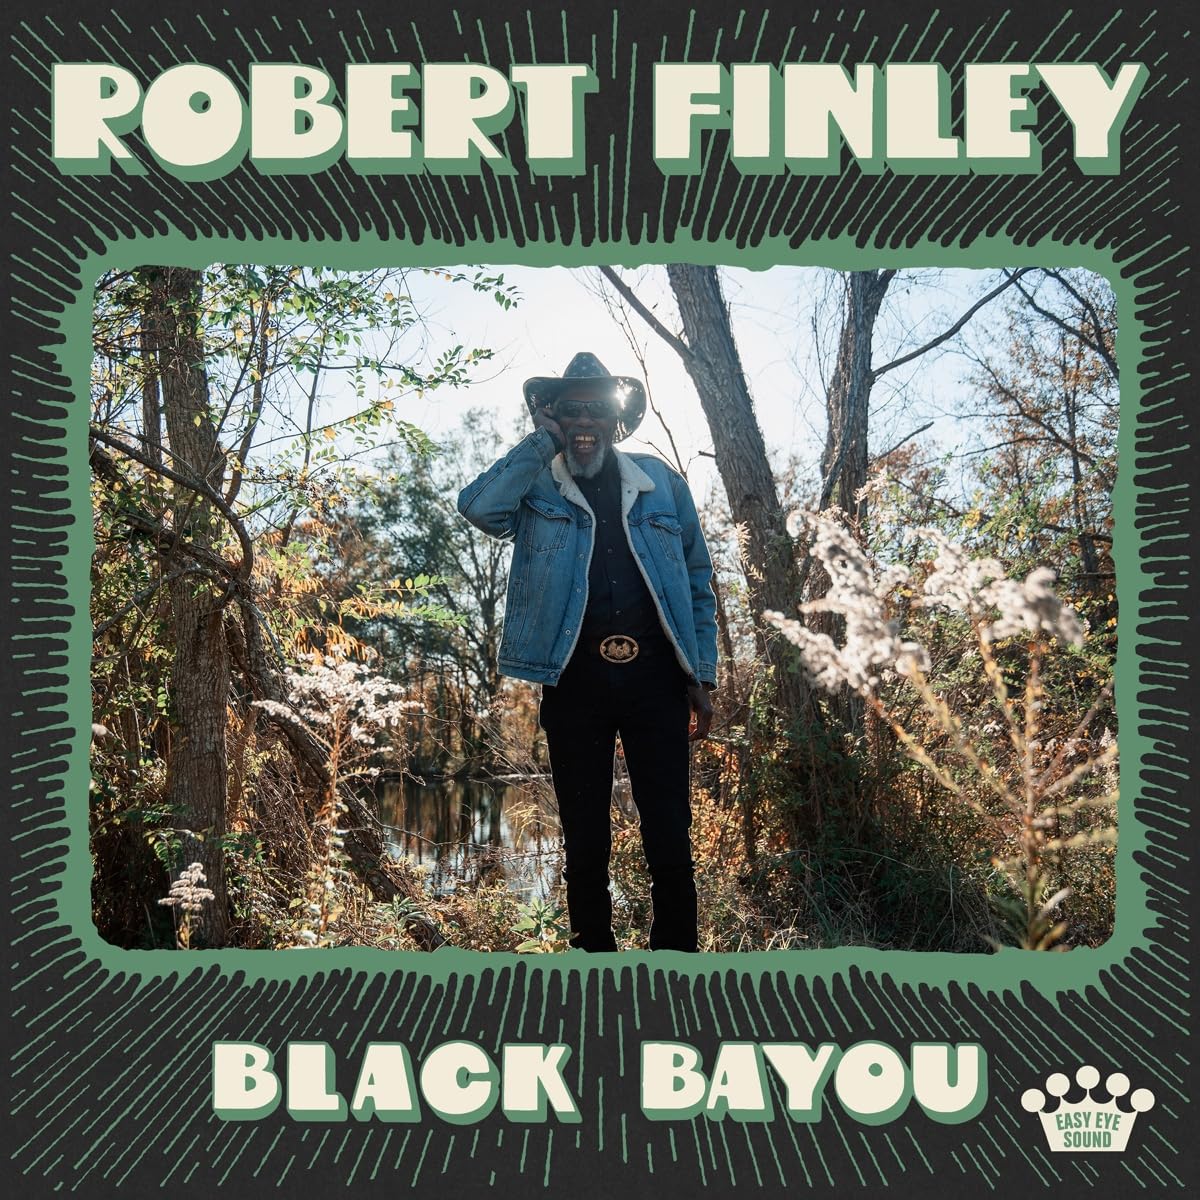 Black Bayou (Limited Edition) - Olive Green Black Splatter Vinyl | Robert Finley